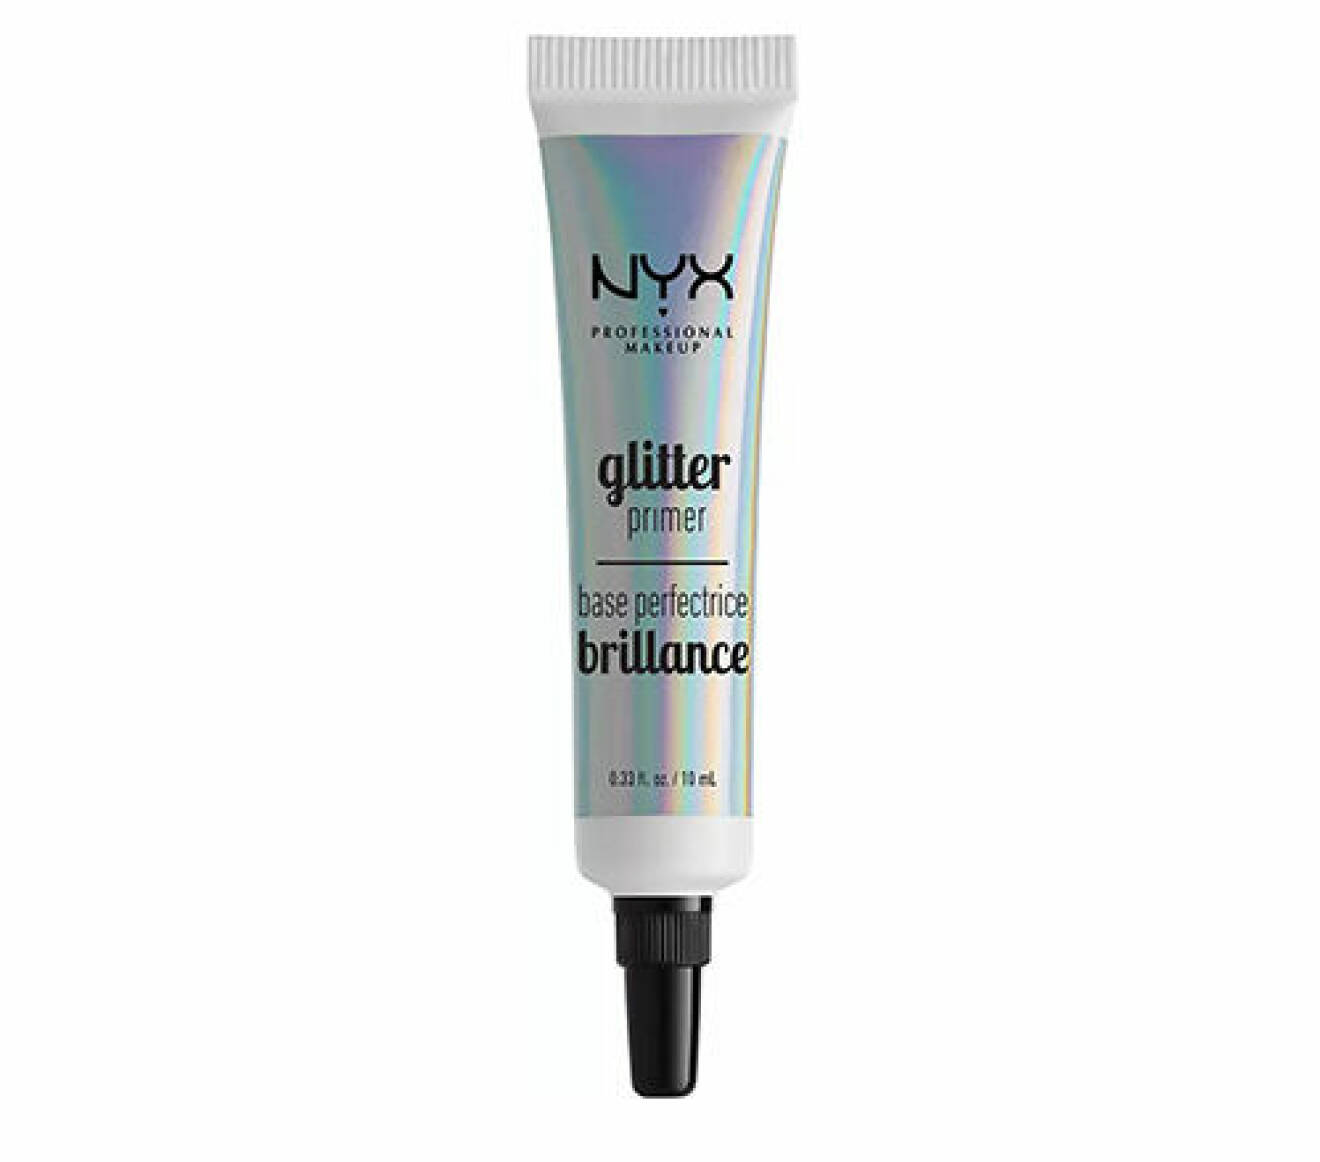 Glitter primer från Nyx Professional Makeup